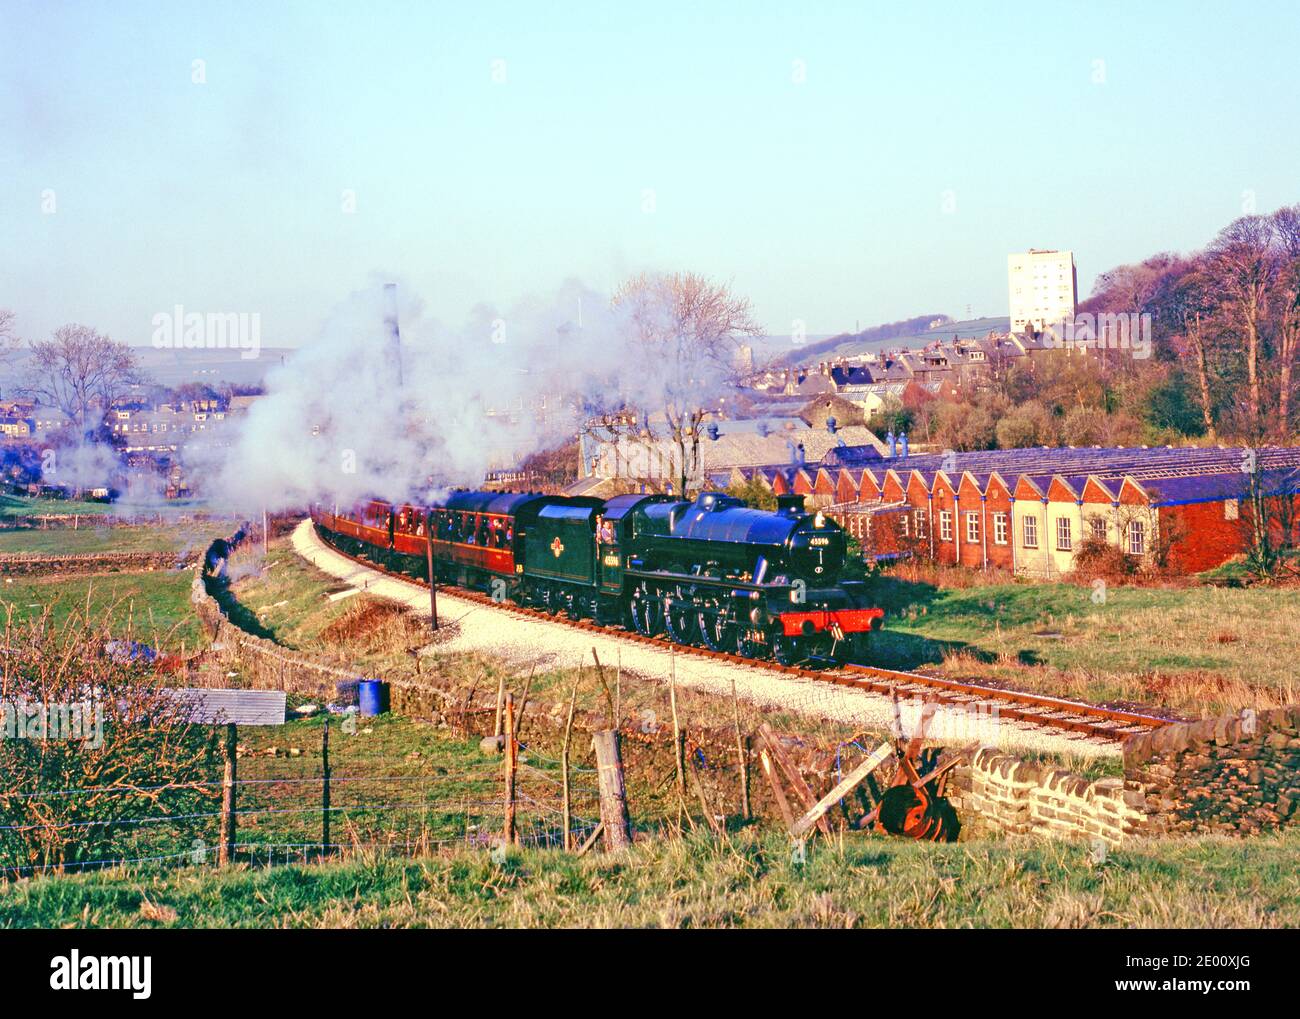 Jubillee clase no 45596 Bahamas en Ingrow, Keighley Worth Valley Railway, North Yorkshire, Inglaterra Foto de stock